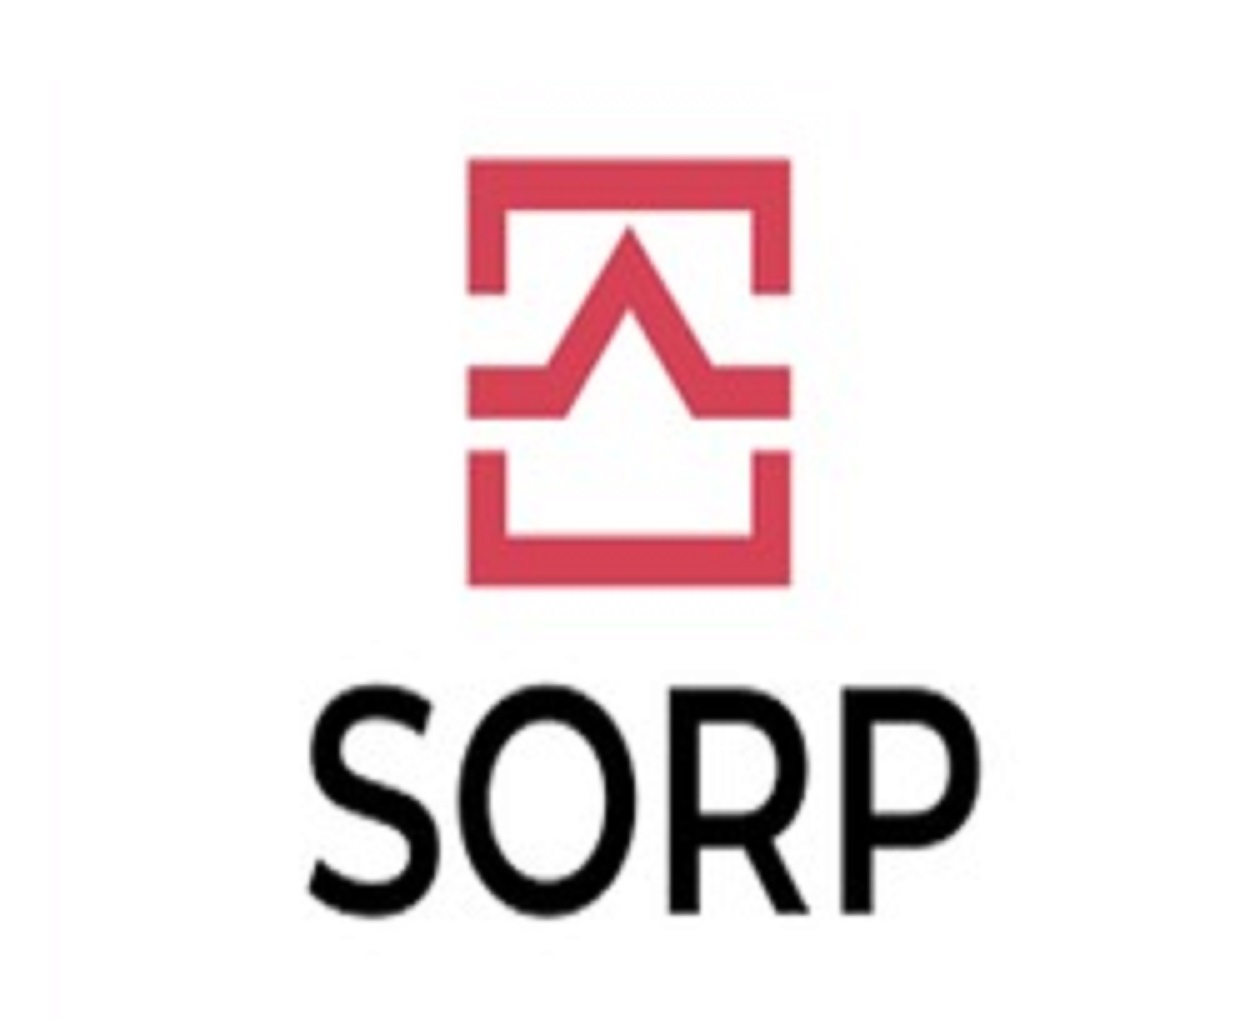 Sorp Real Estate